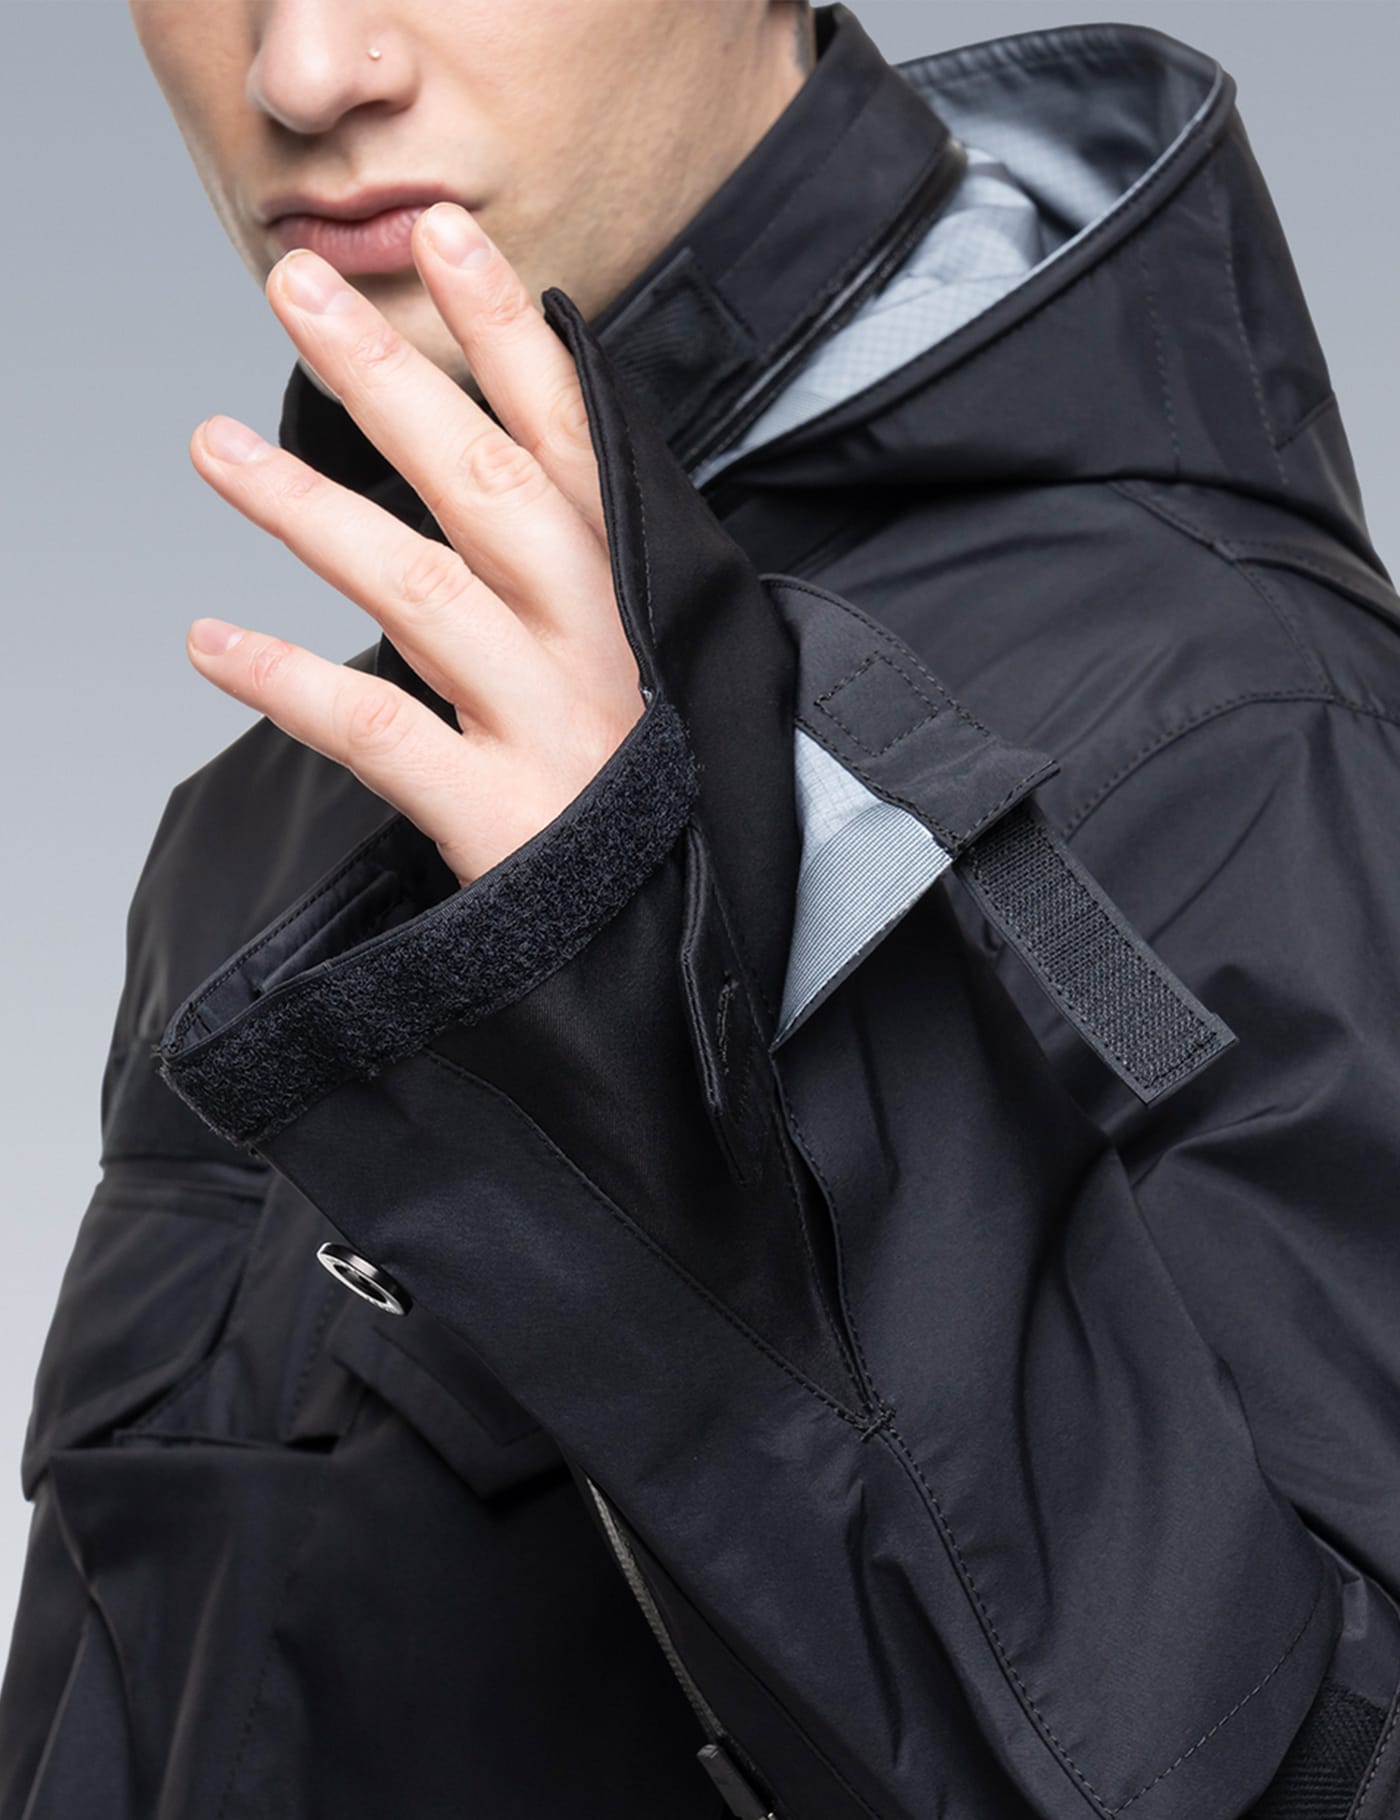 Sacai - Sacai x Acronym Layered Hood Jacket | HBX - Globally Curated  Fashion and Lifestyle by Hypebeast